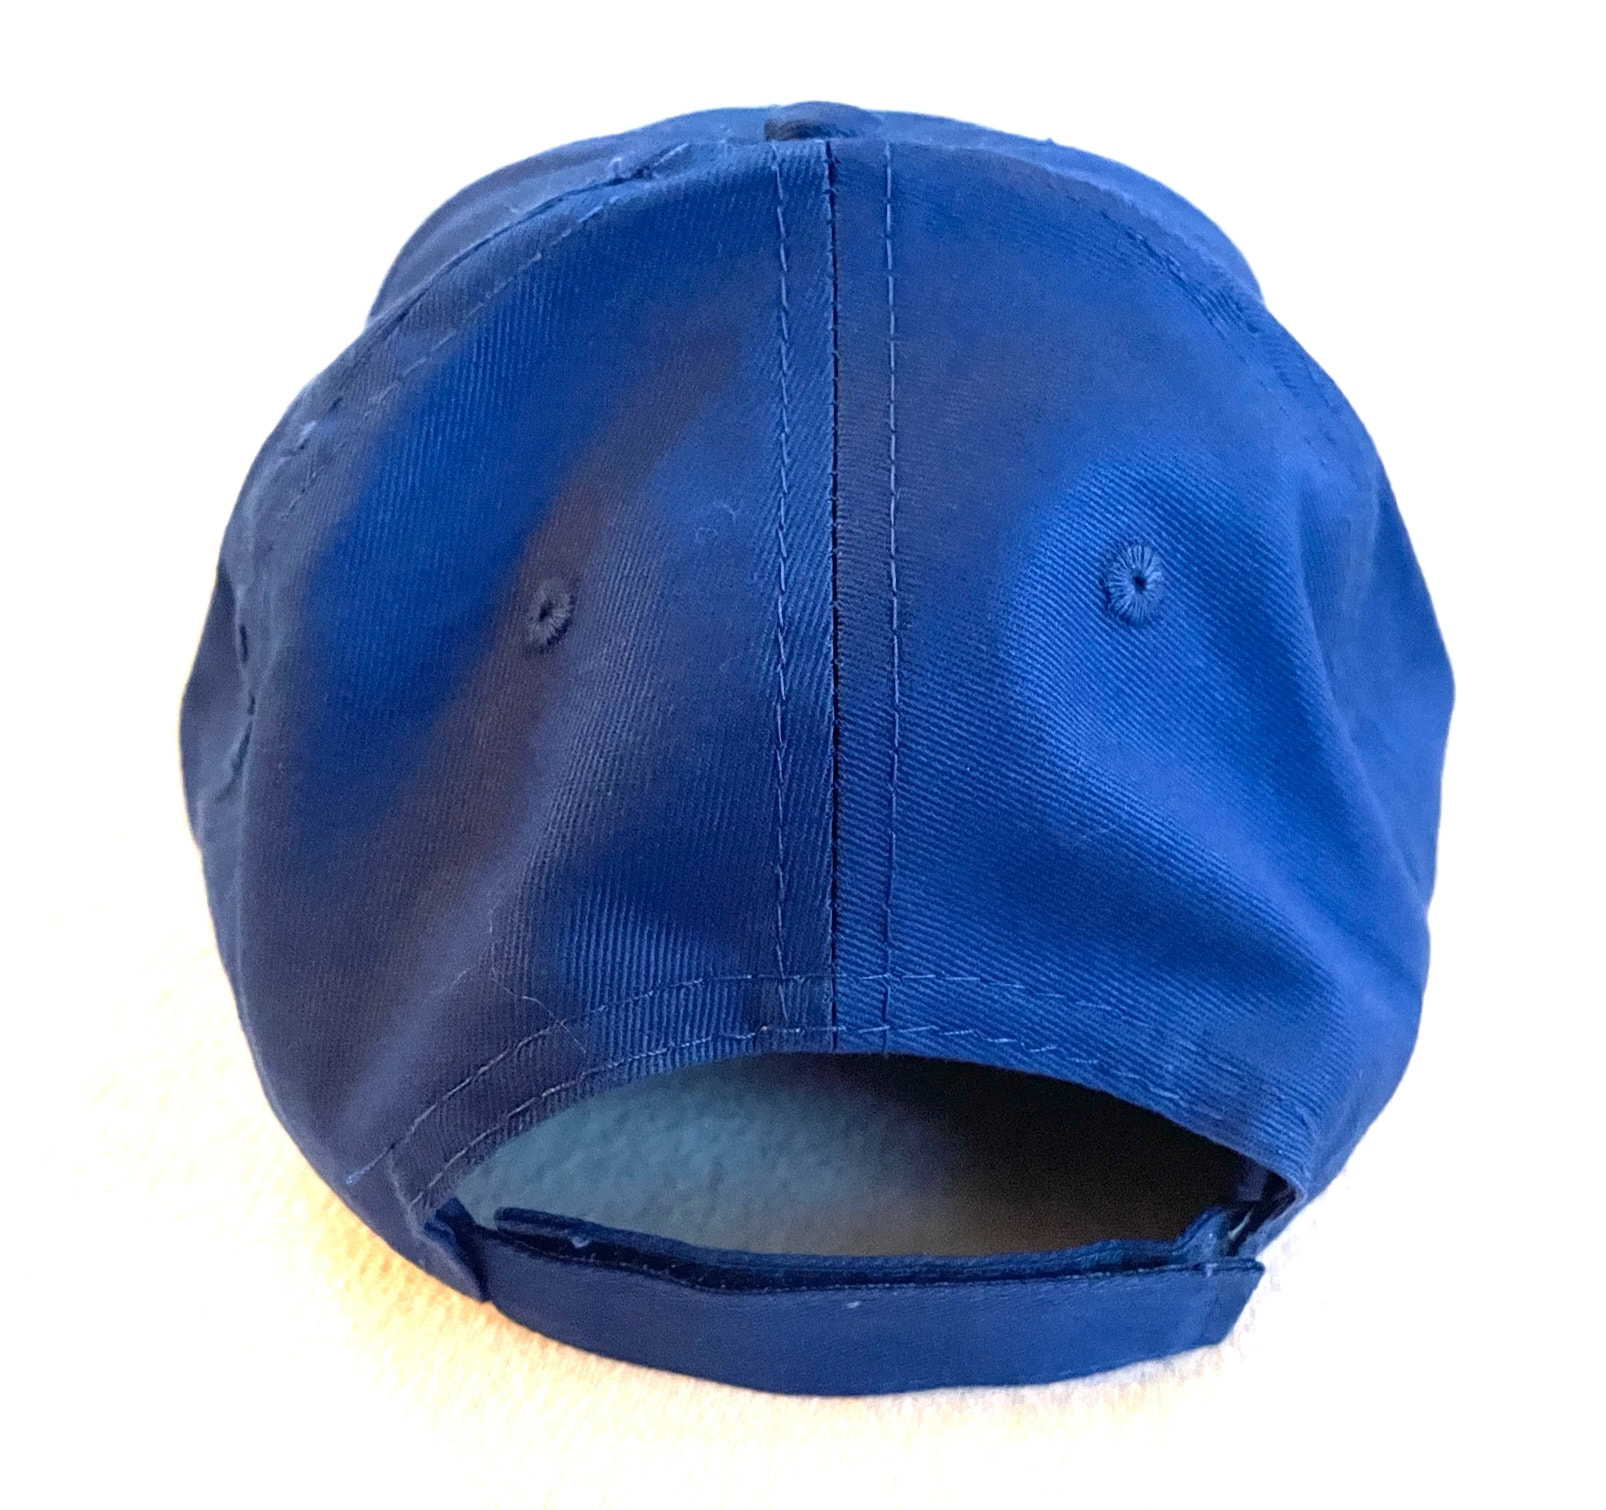 SAINTS embroidered baseball cap